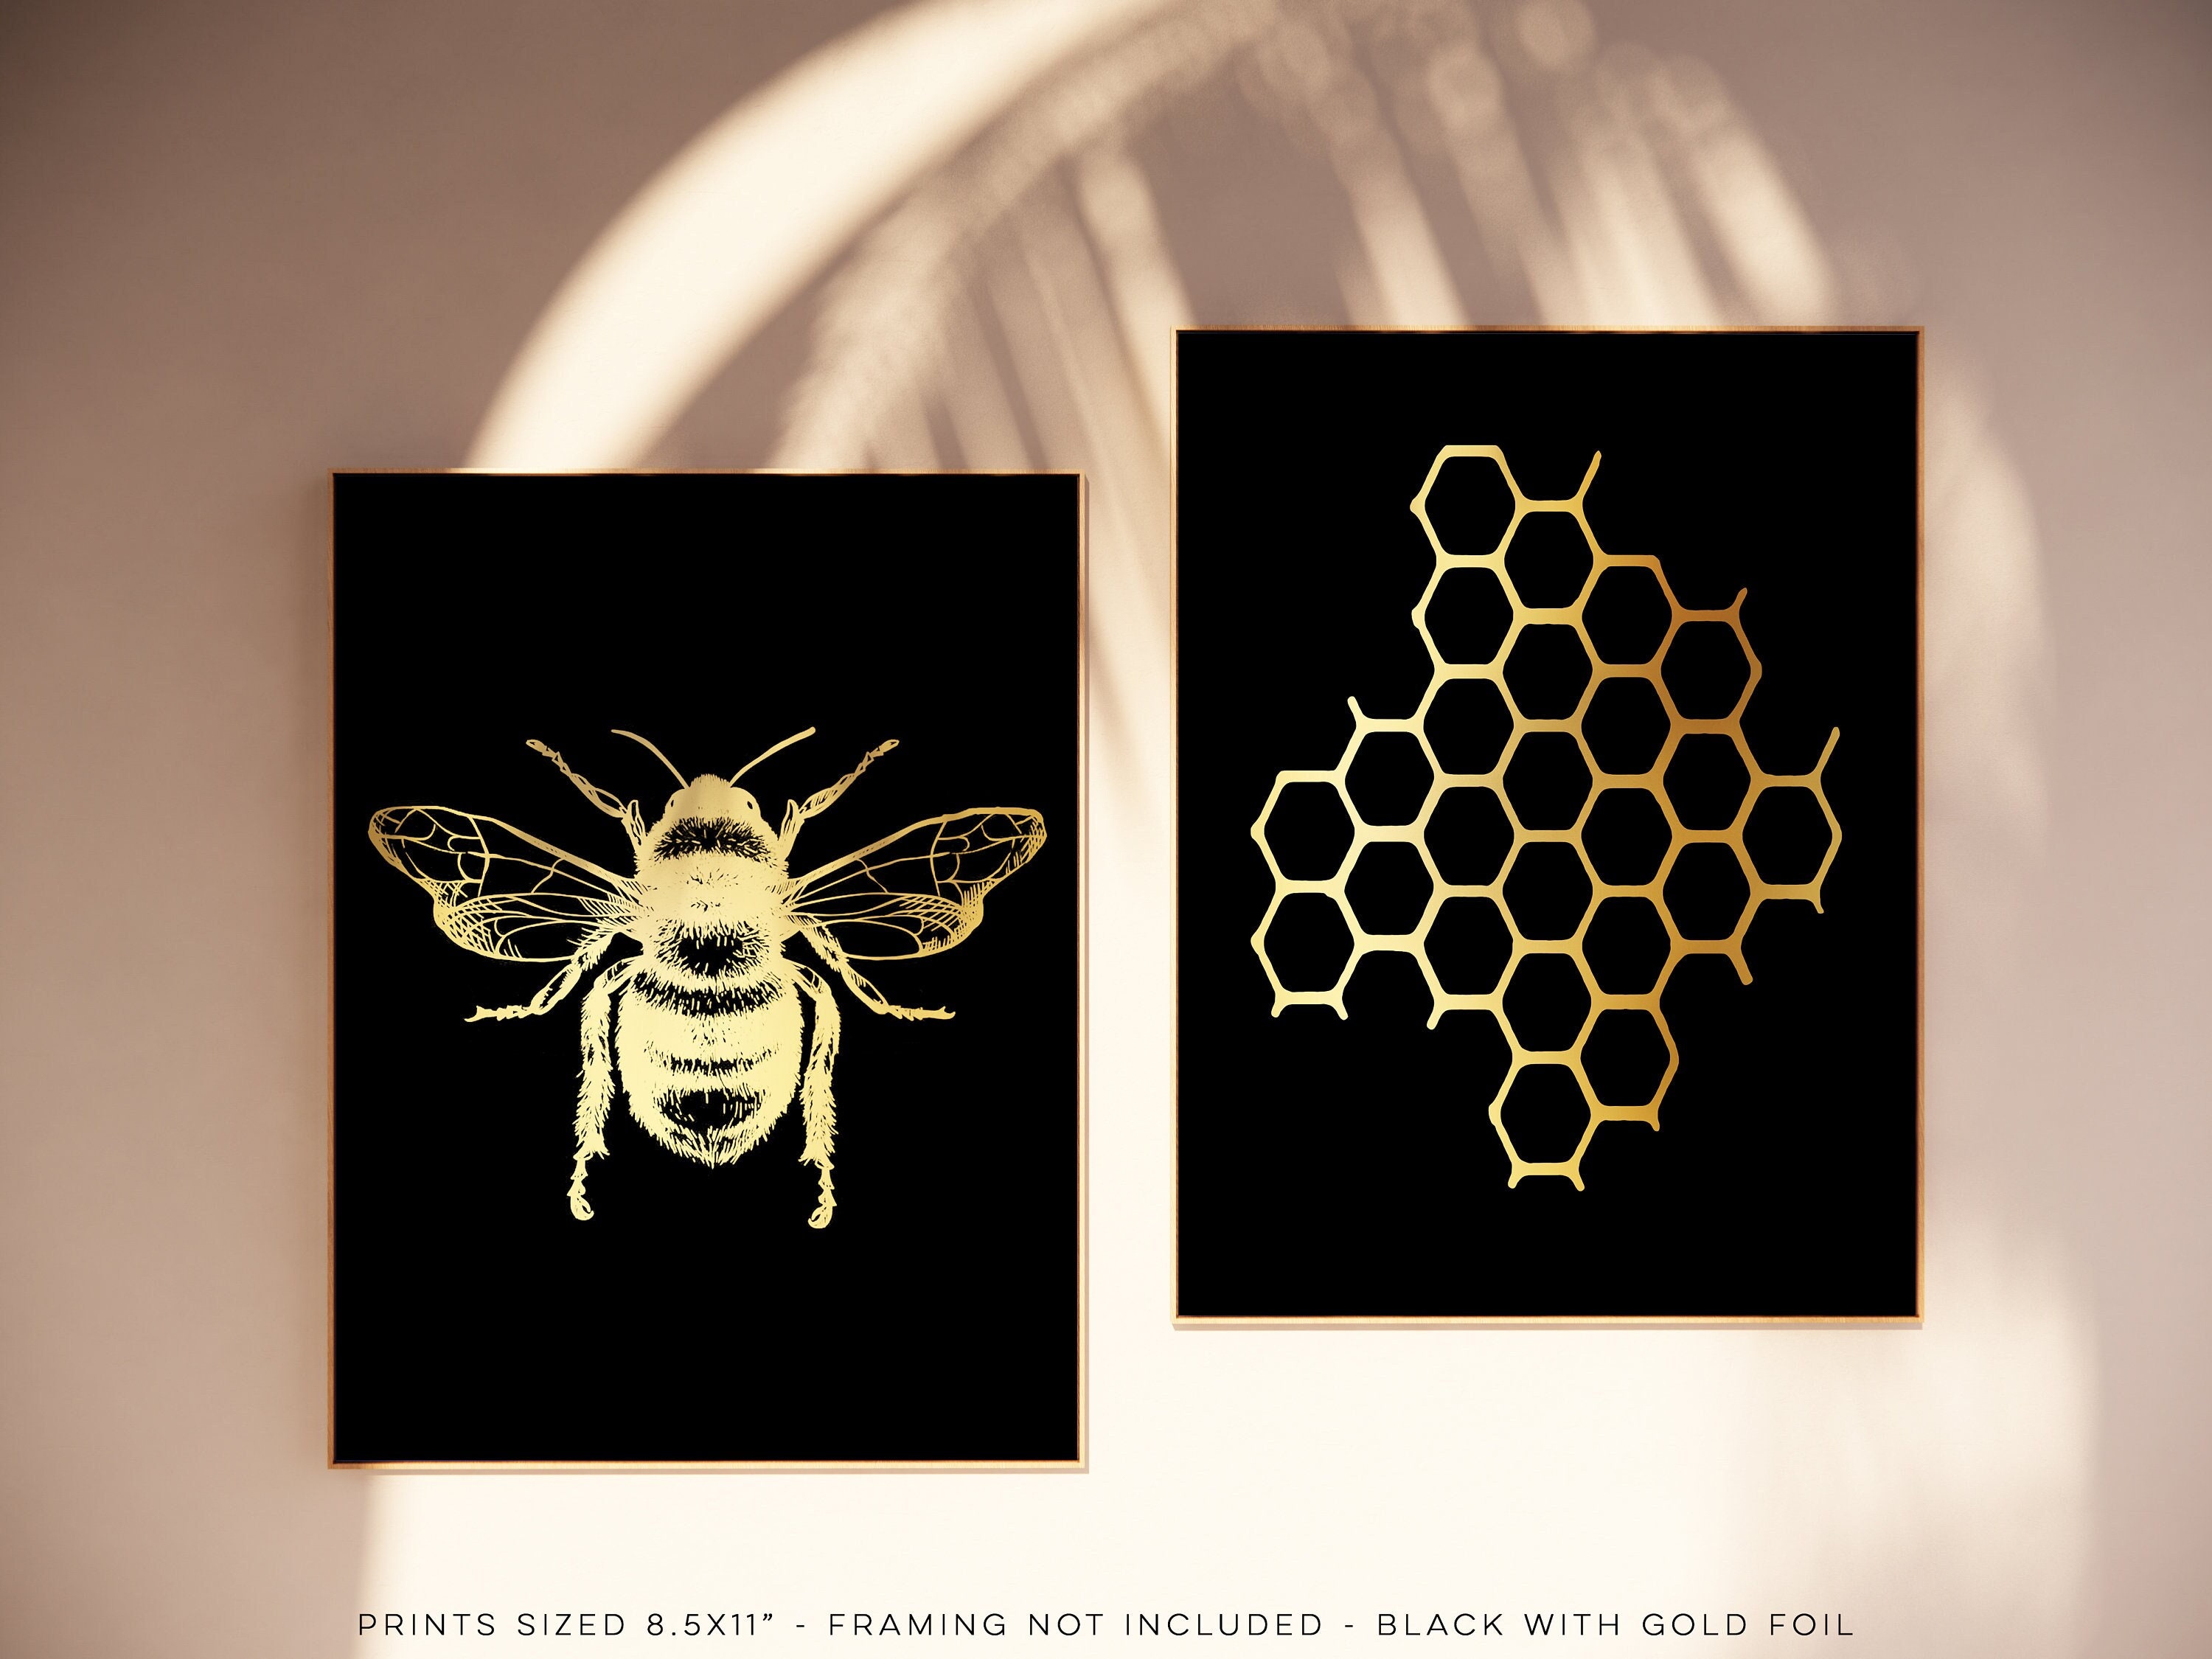 Honeycomb Gold Foil Print Honeycomb Art Print Honeycomb Decor Gold Foil  Prints Honey Bee Art Beekeeper Gift White and Gold Art 